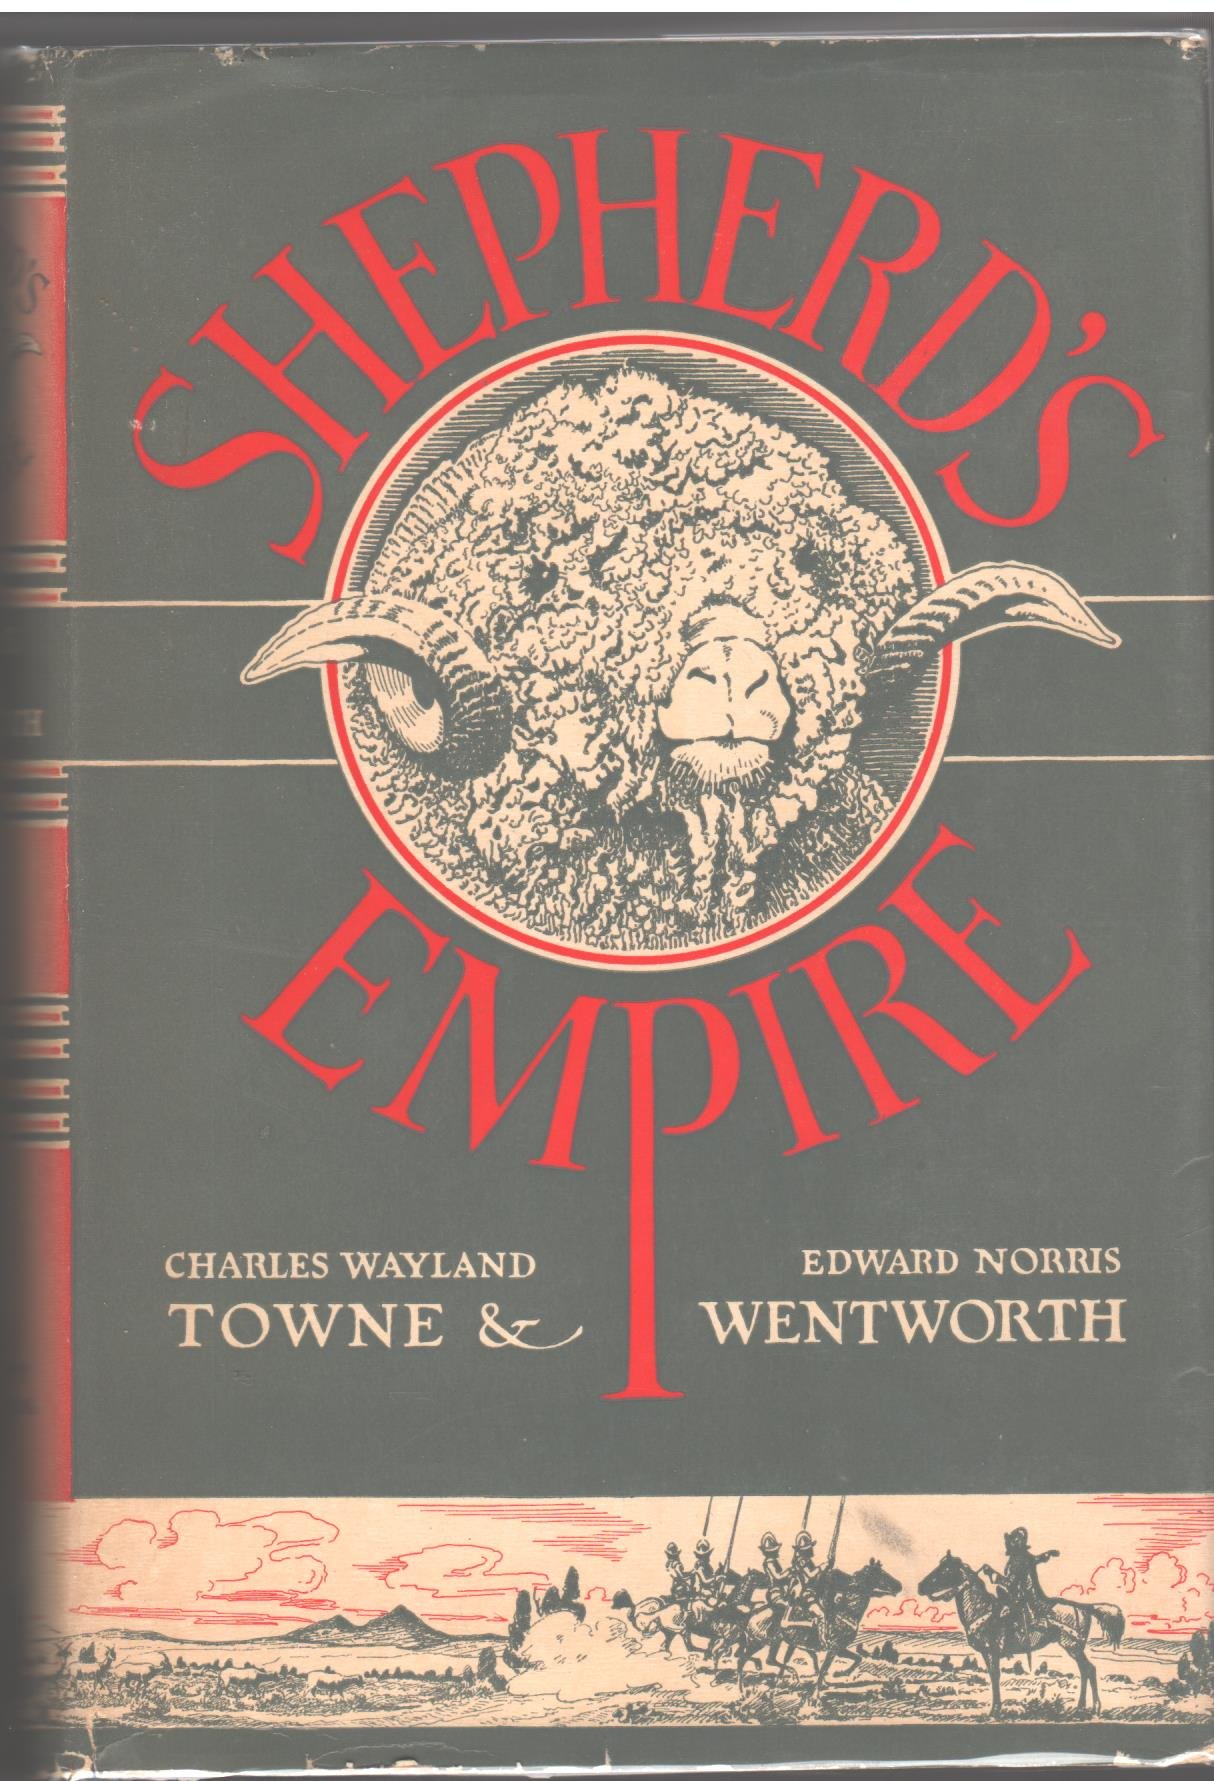 Shepherd's empire (book cover)